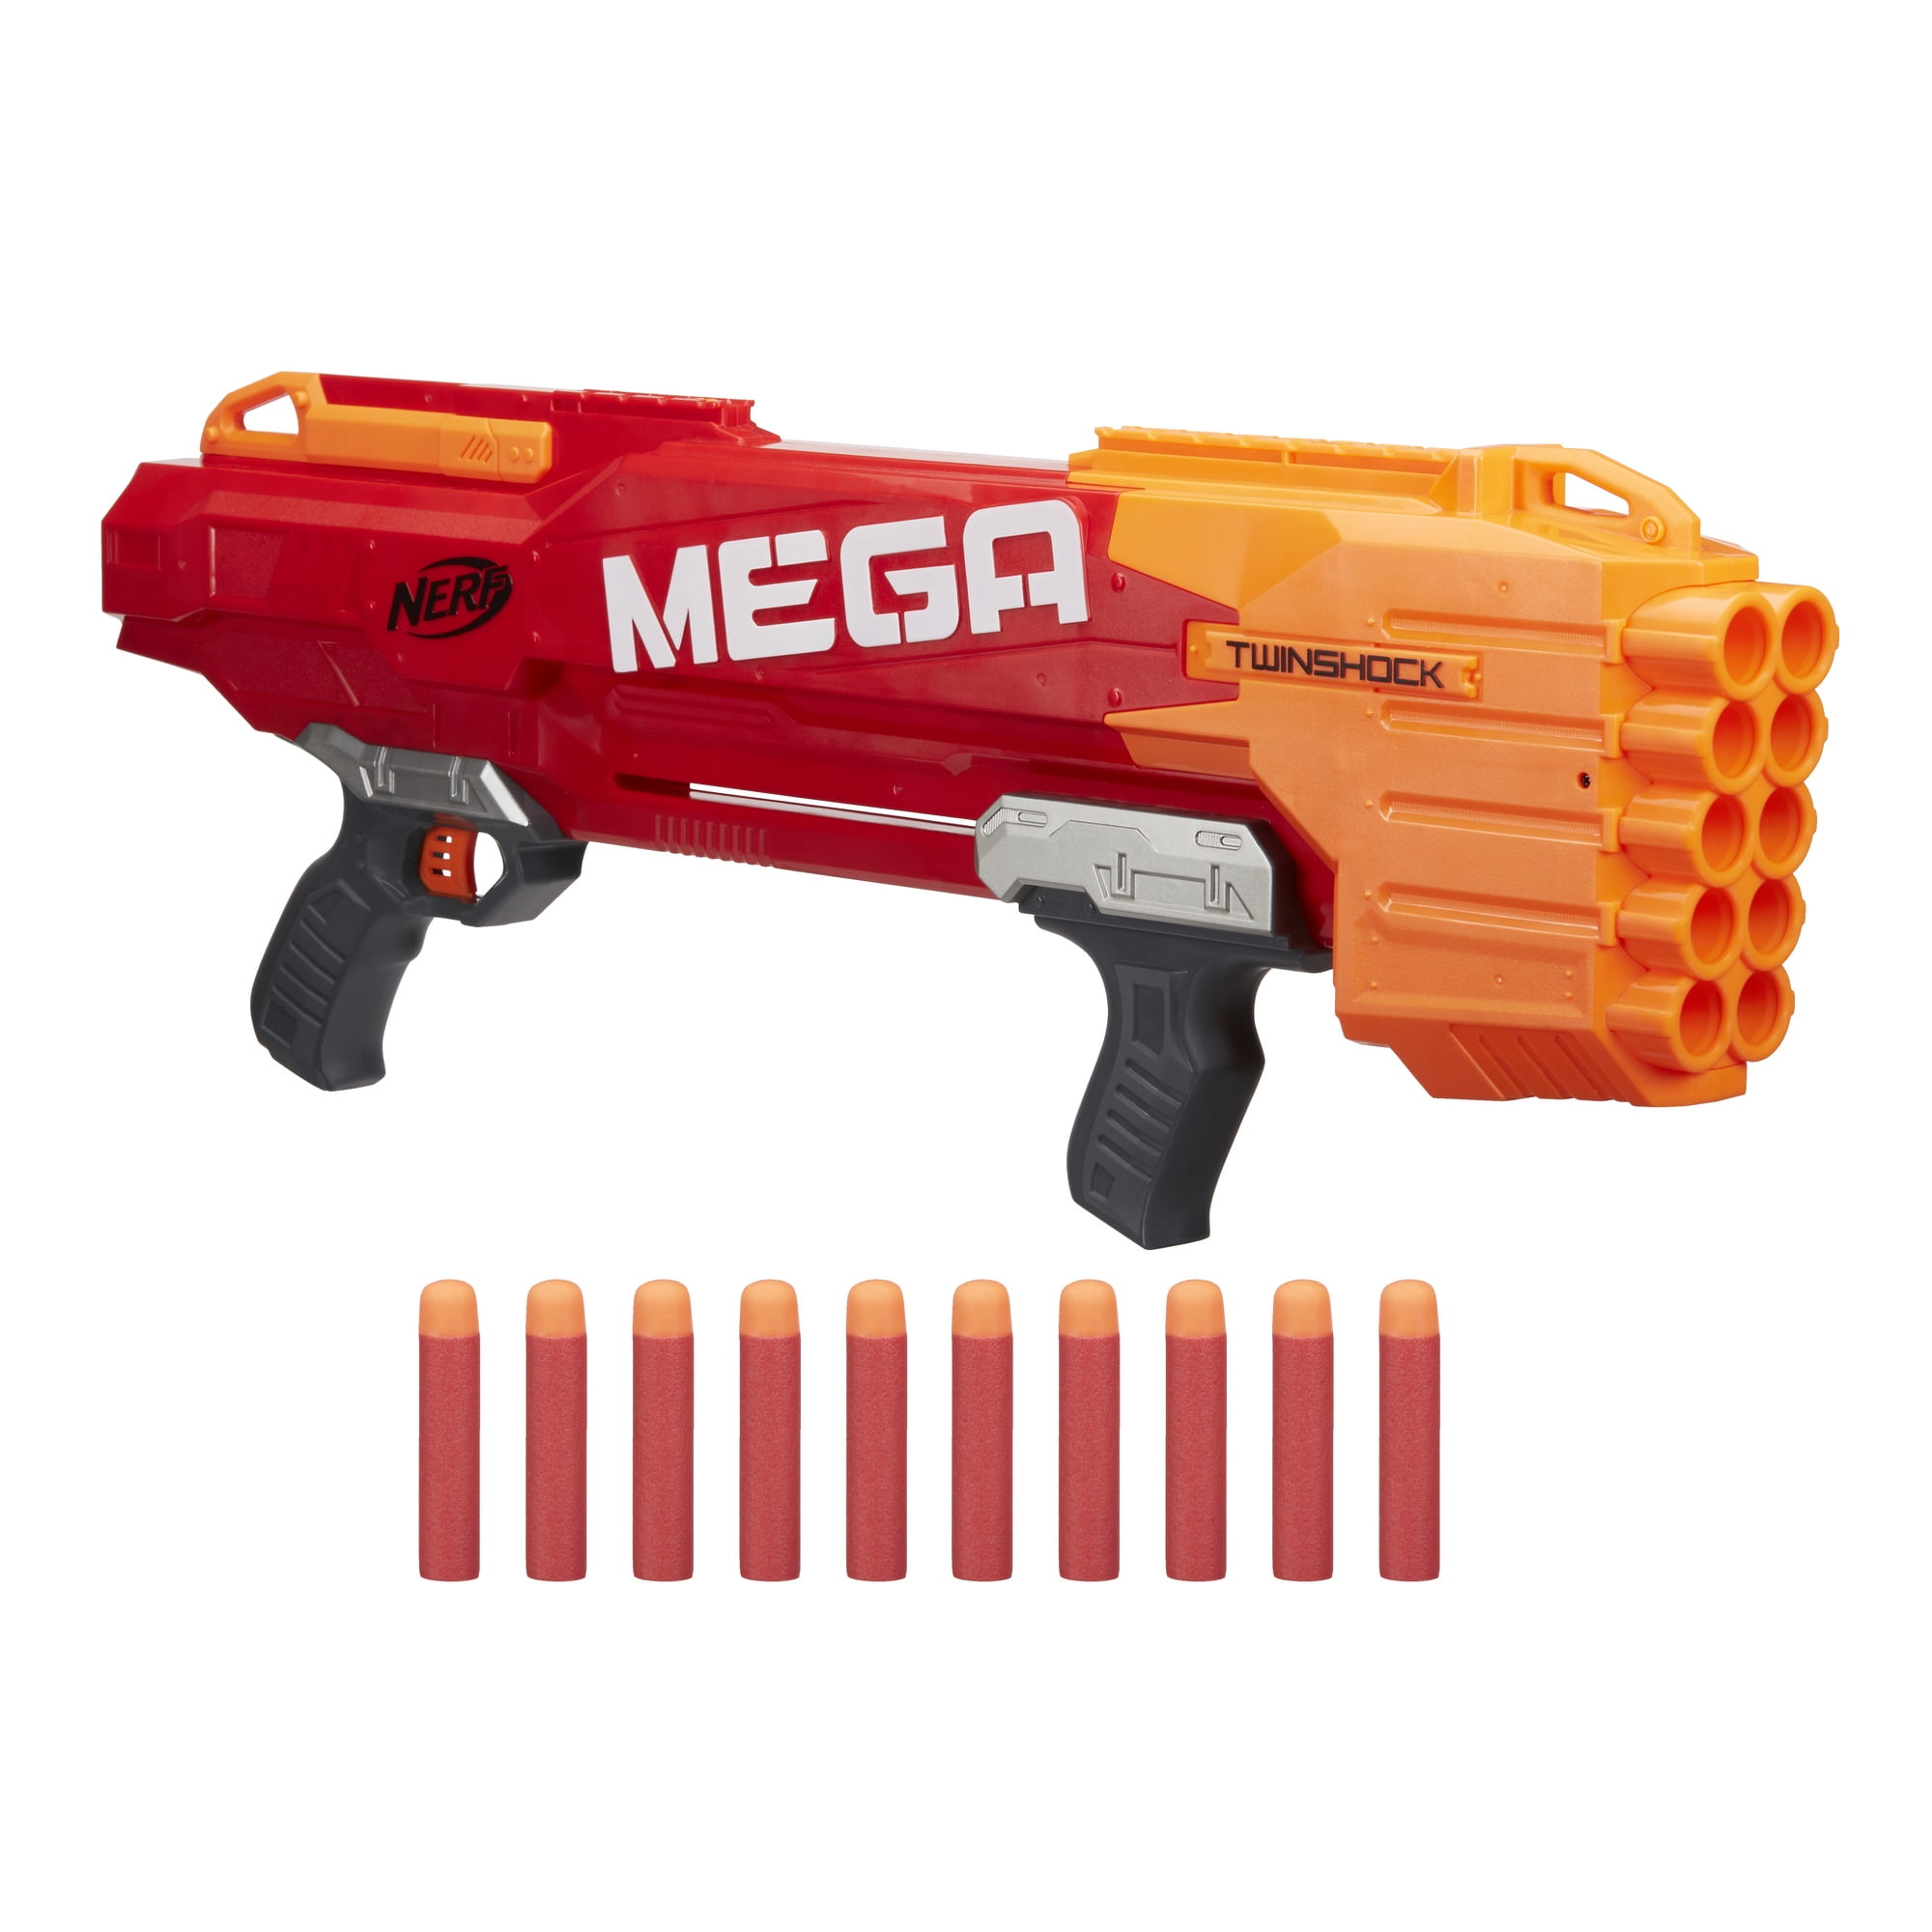 2013 NERF Mega BigShock Pistol Dart Gun With Darts C031G for sale online 